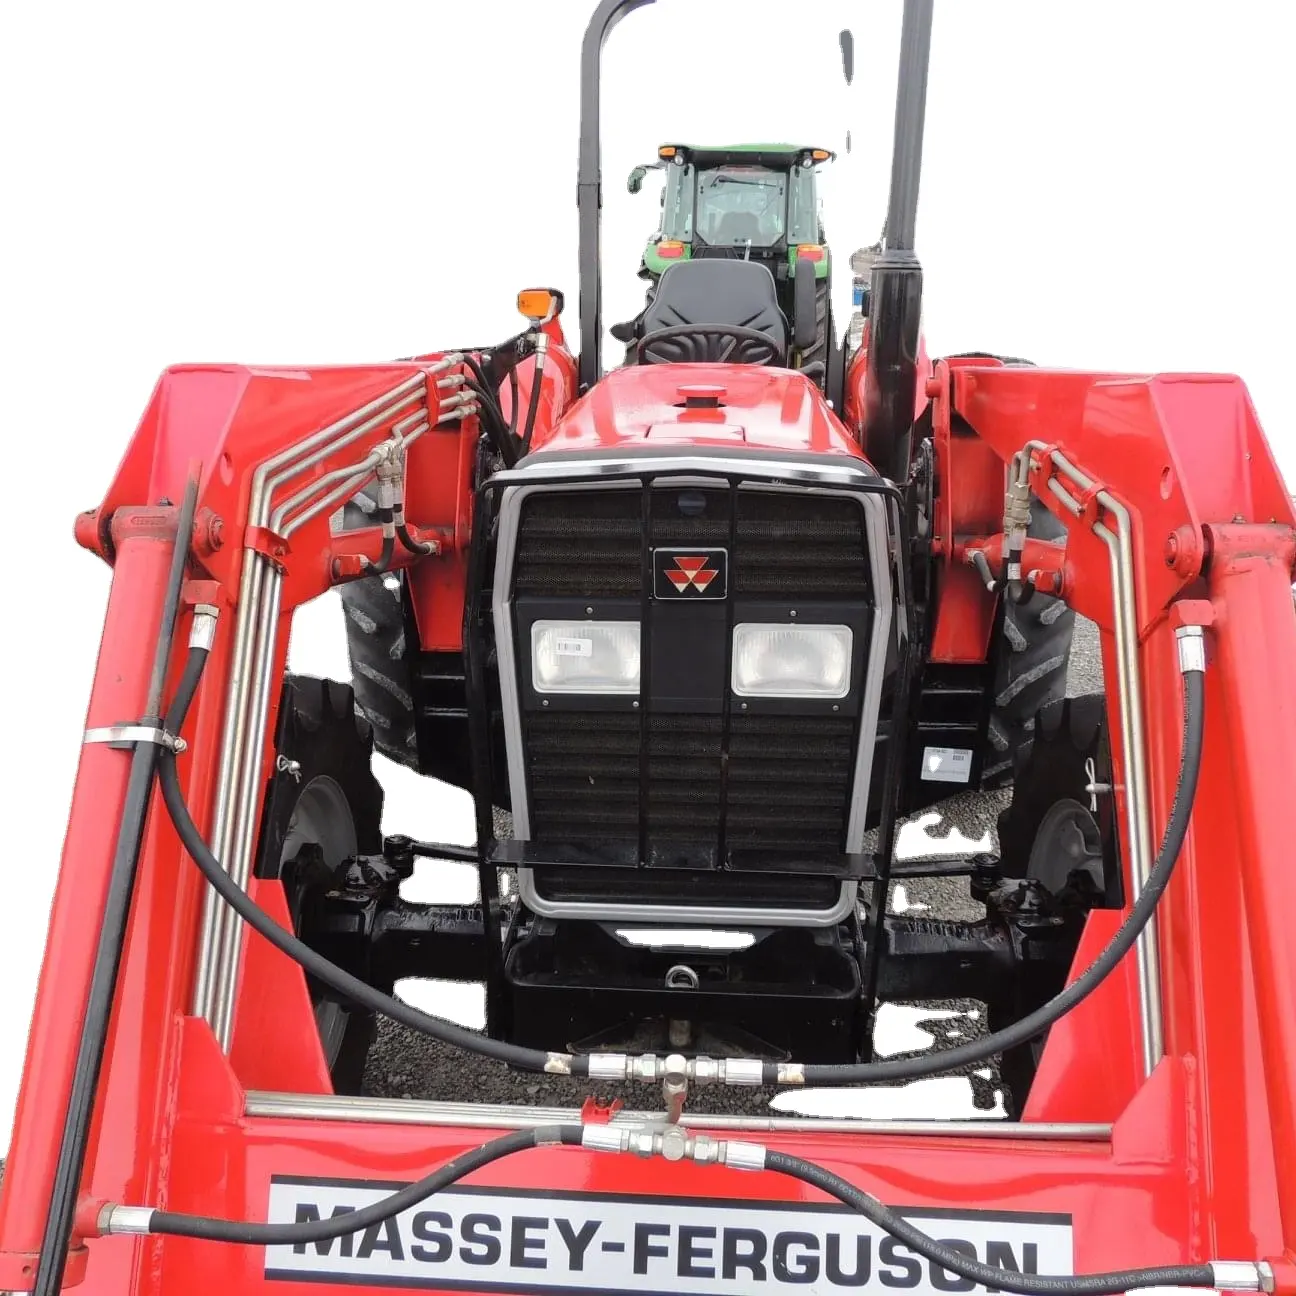 Massey ferguson 243 sử dụng máy kéo